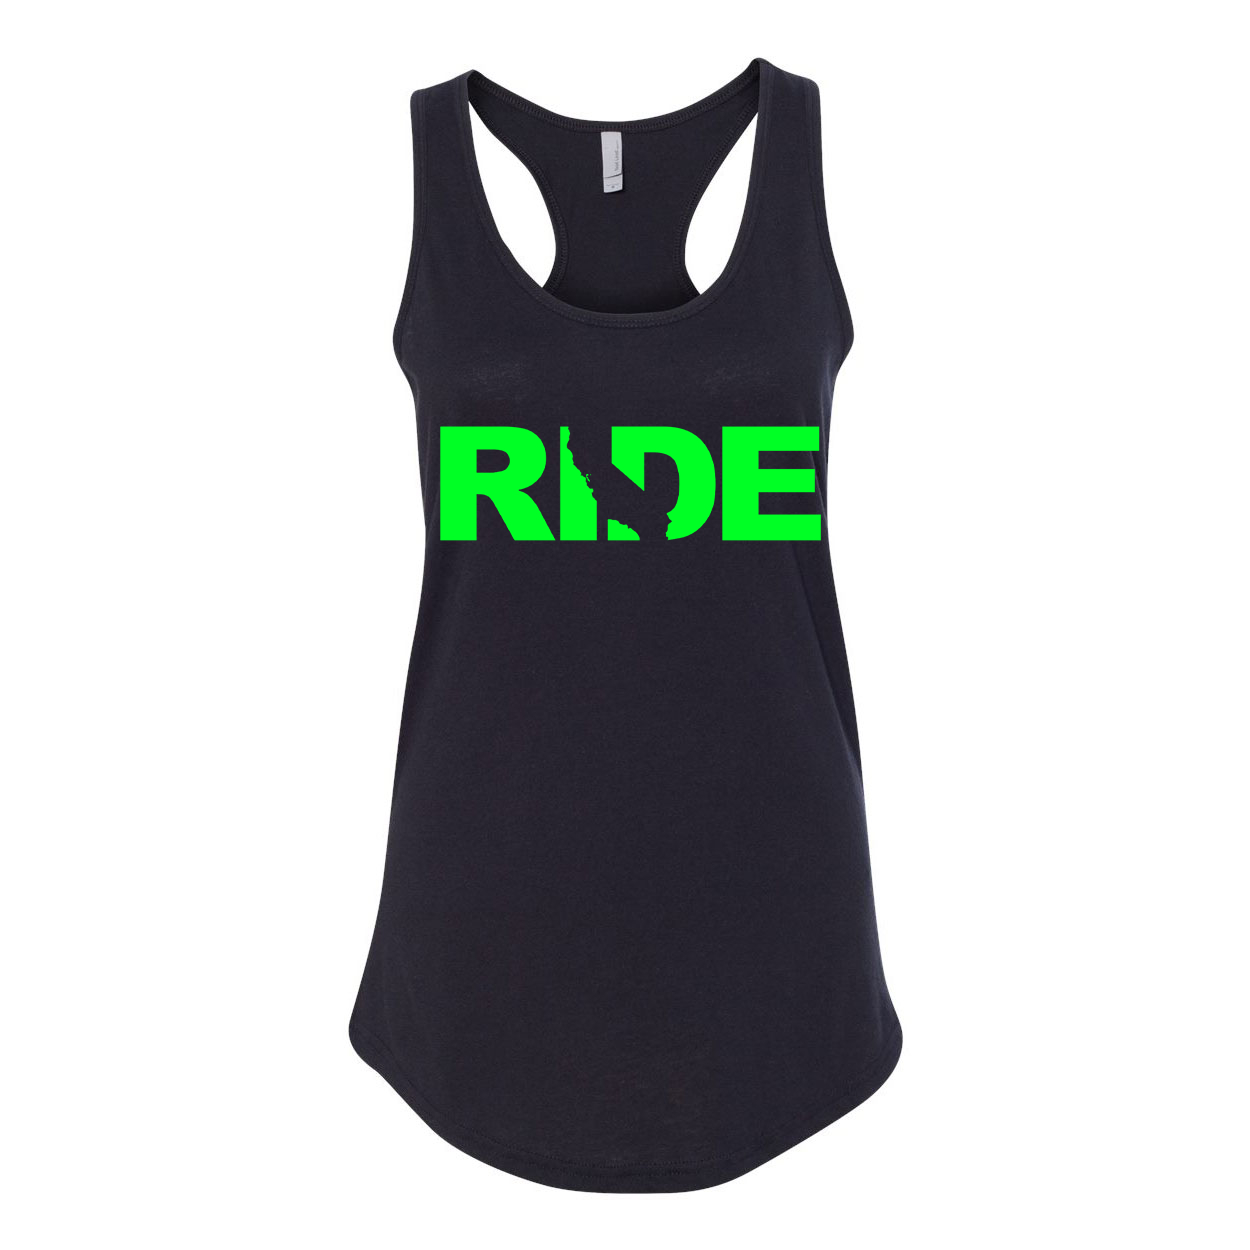 Ride California Classic Women's Racerback Tank Top Black (Green Logo)